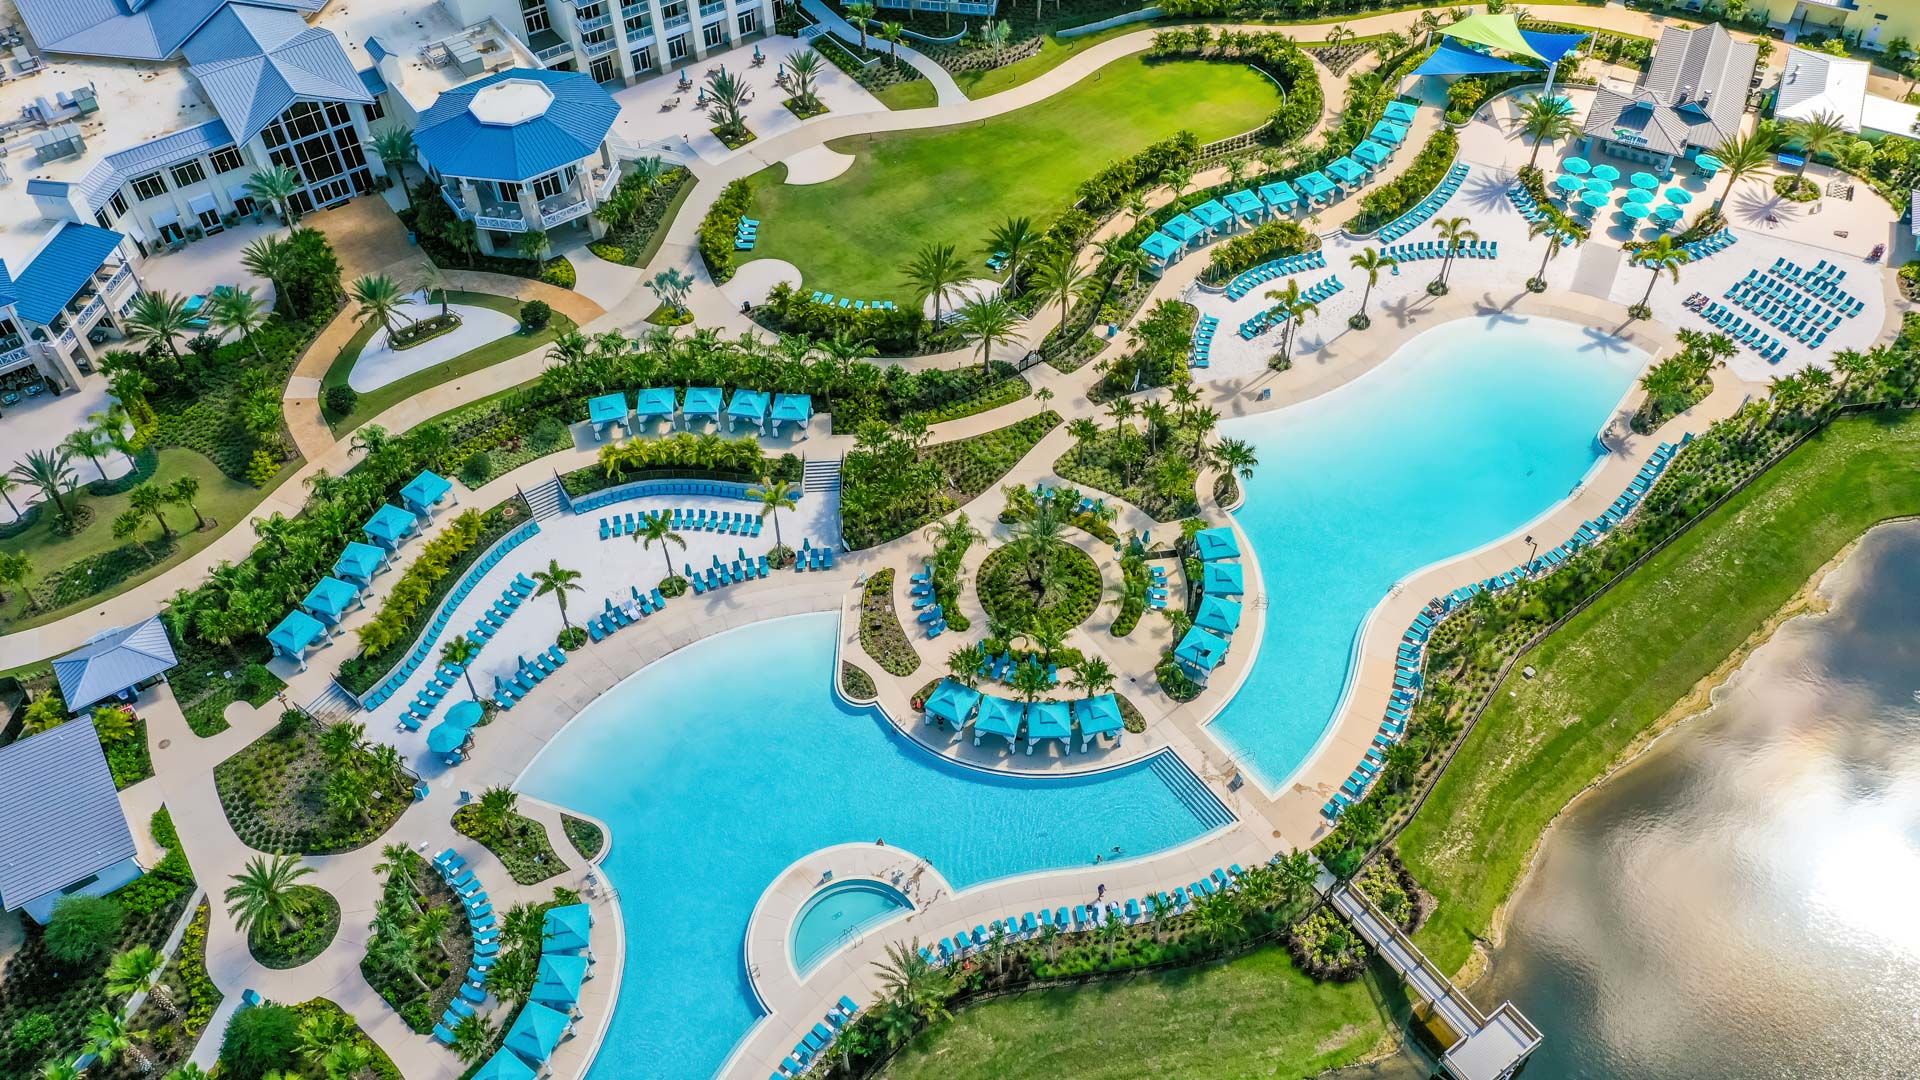 Our Florida Getaway | Margaritaville Resort Orlando